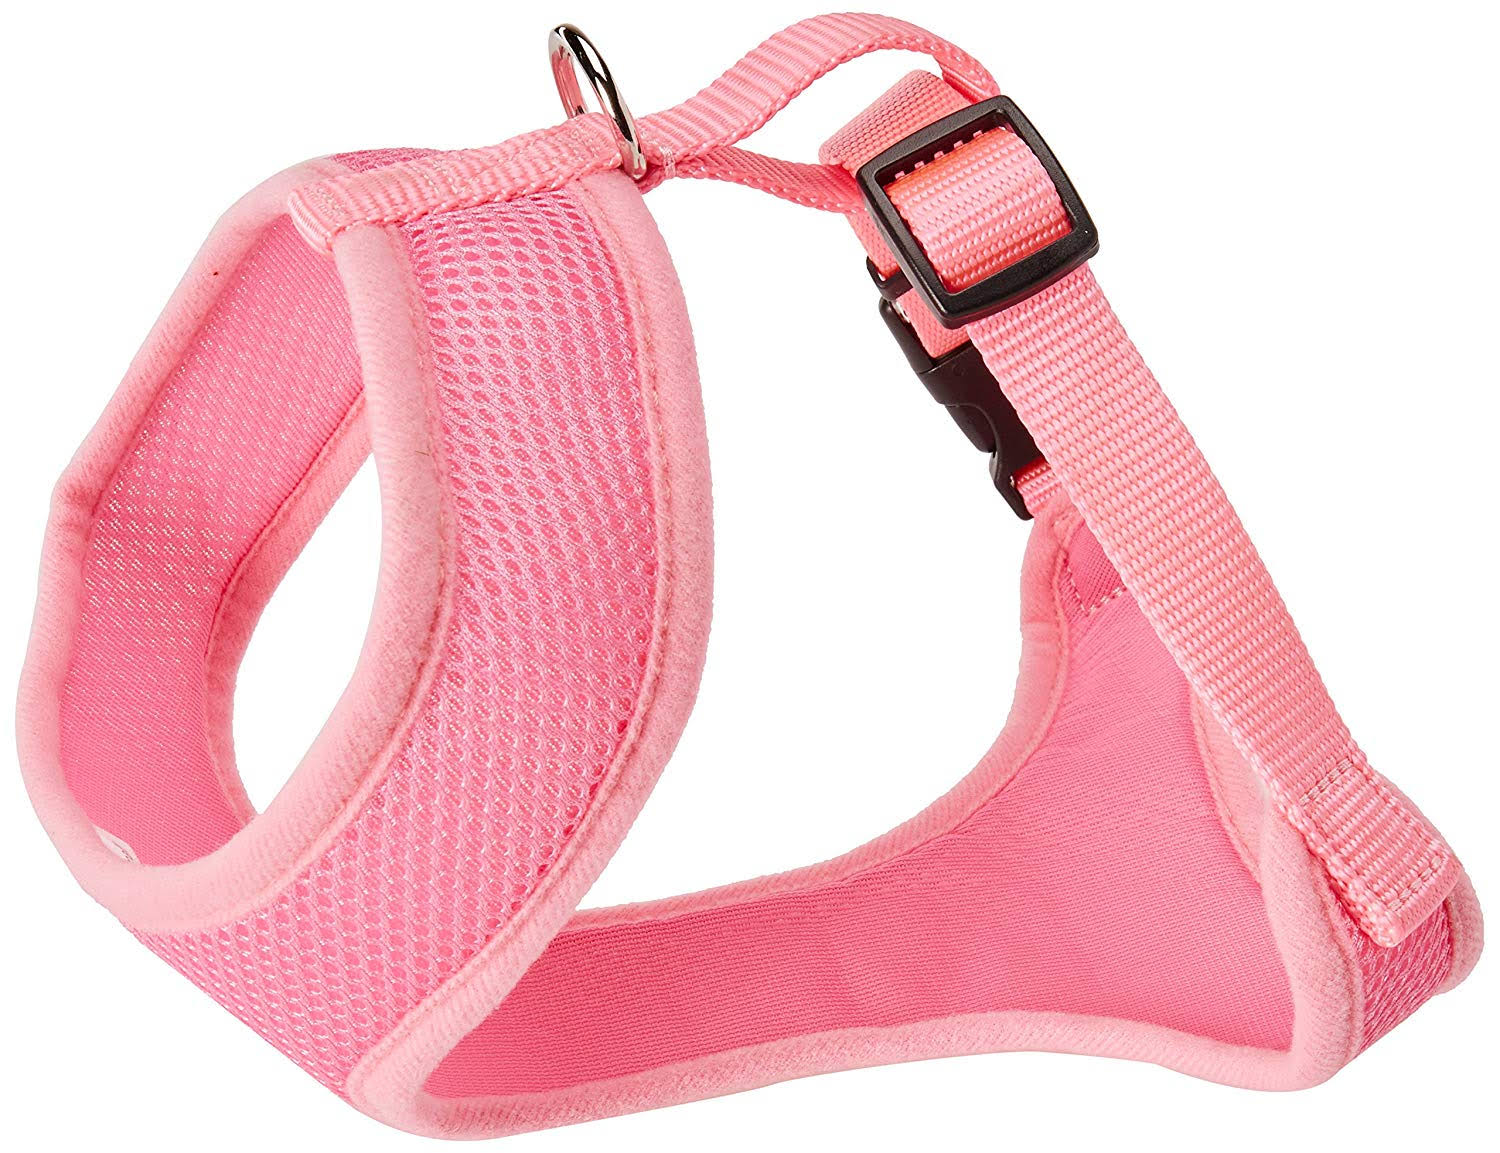 Coastal Pet Products Nylon Comfort Soft Adjustable Dog Harness - Bright Pink, Small